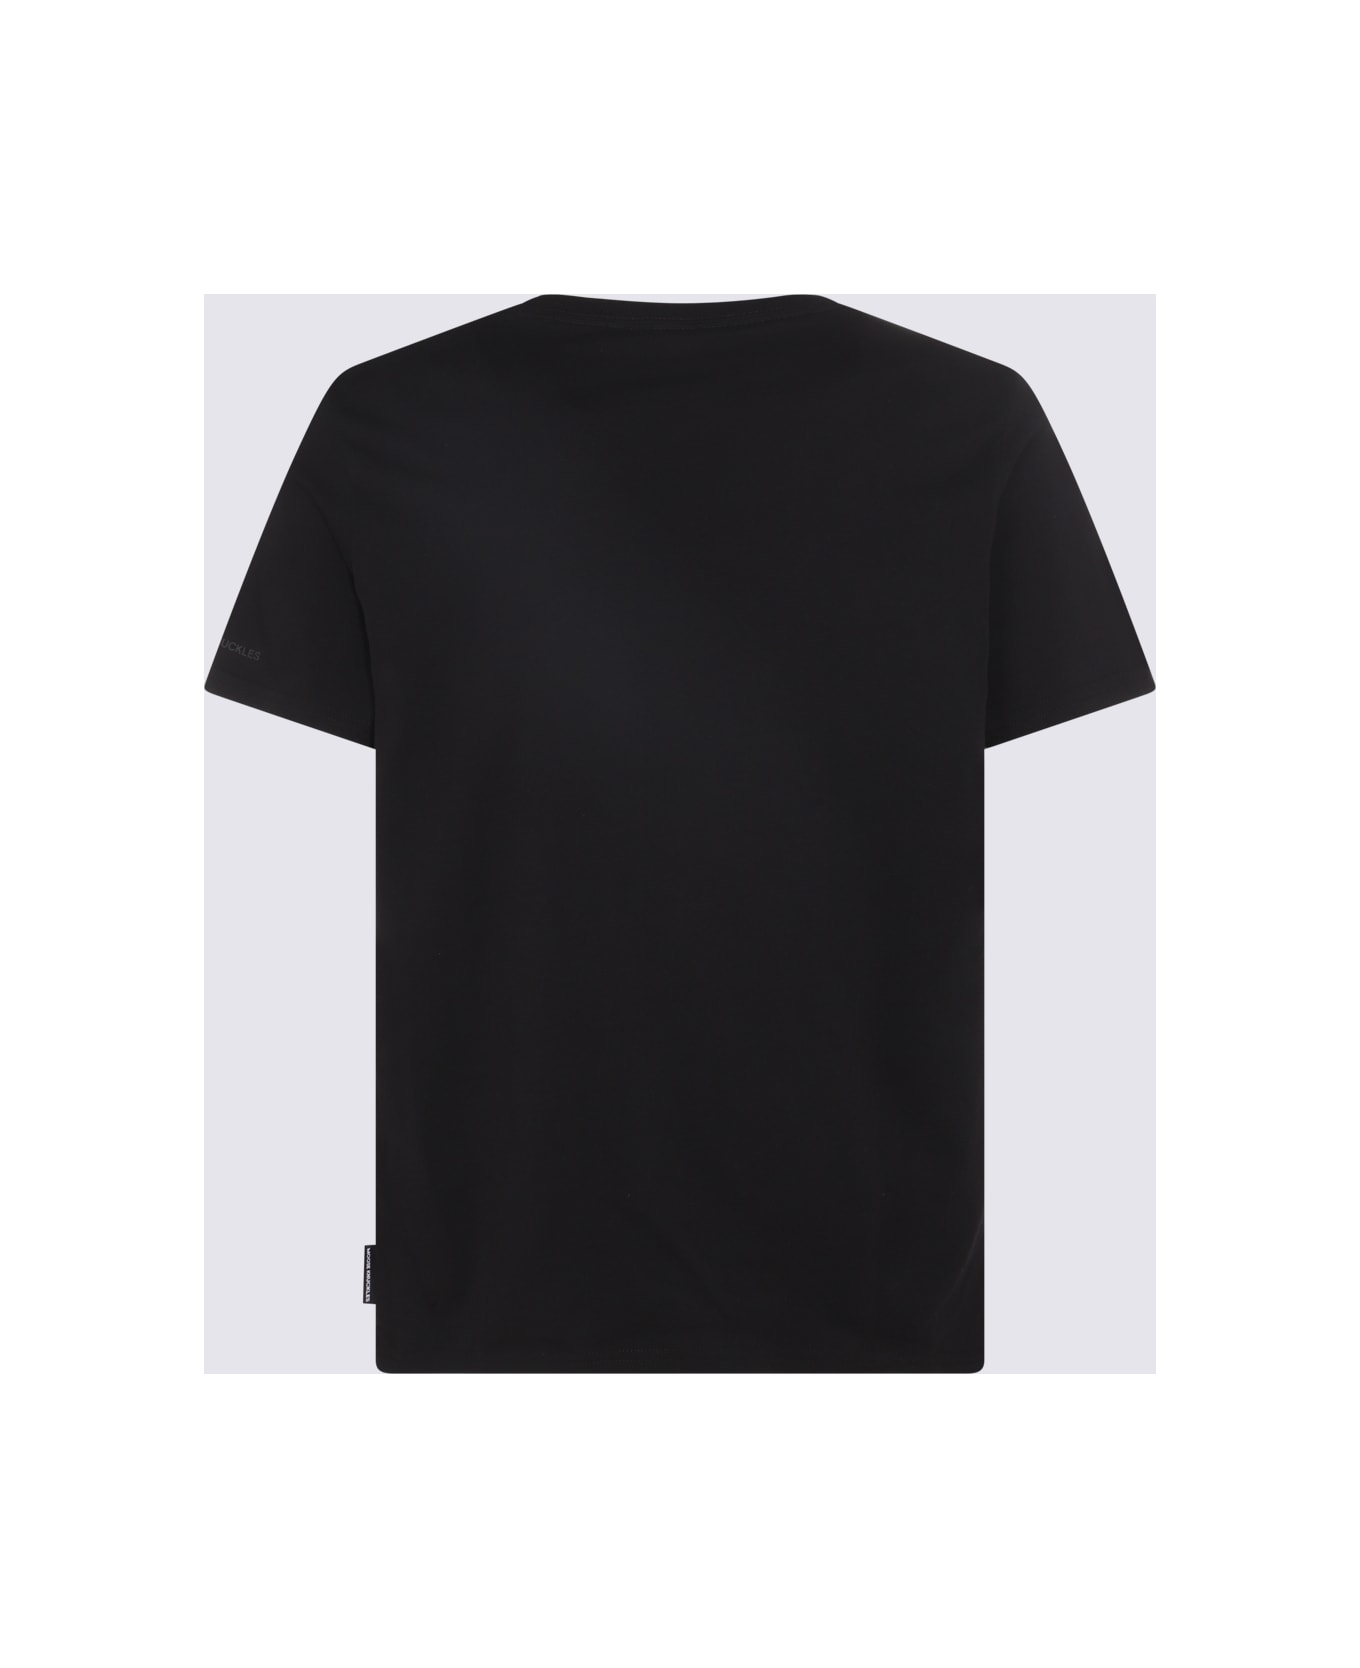 Moose Knuckles Black Cotton T-shirt - Black